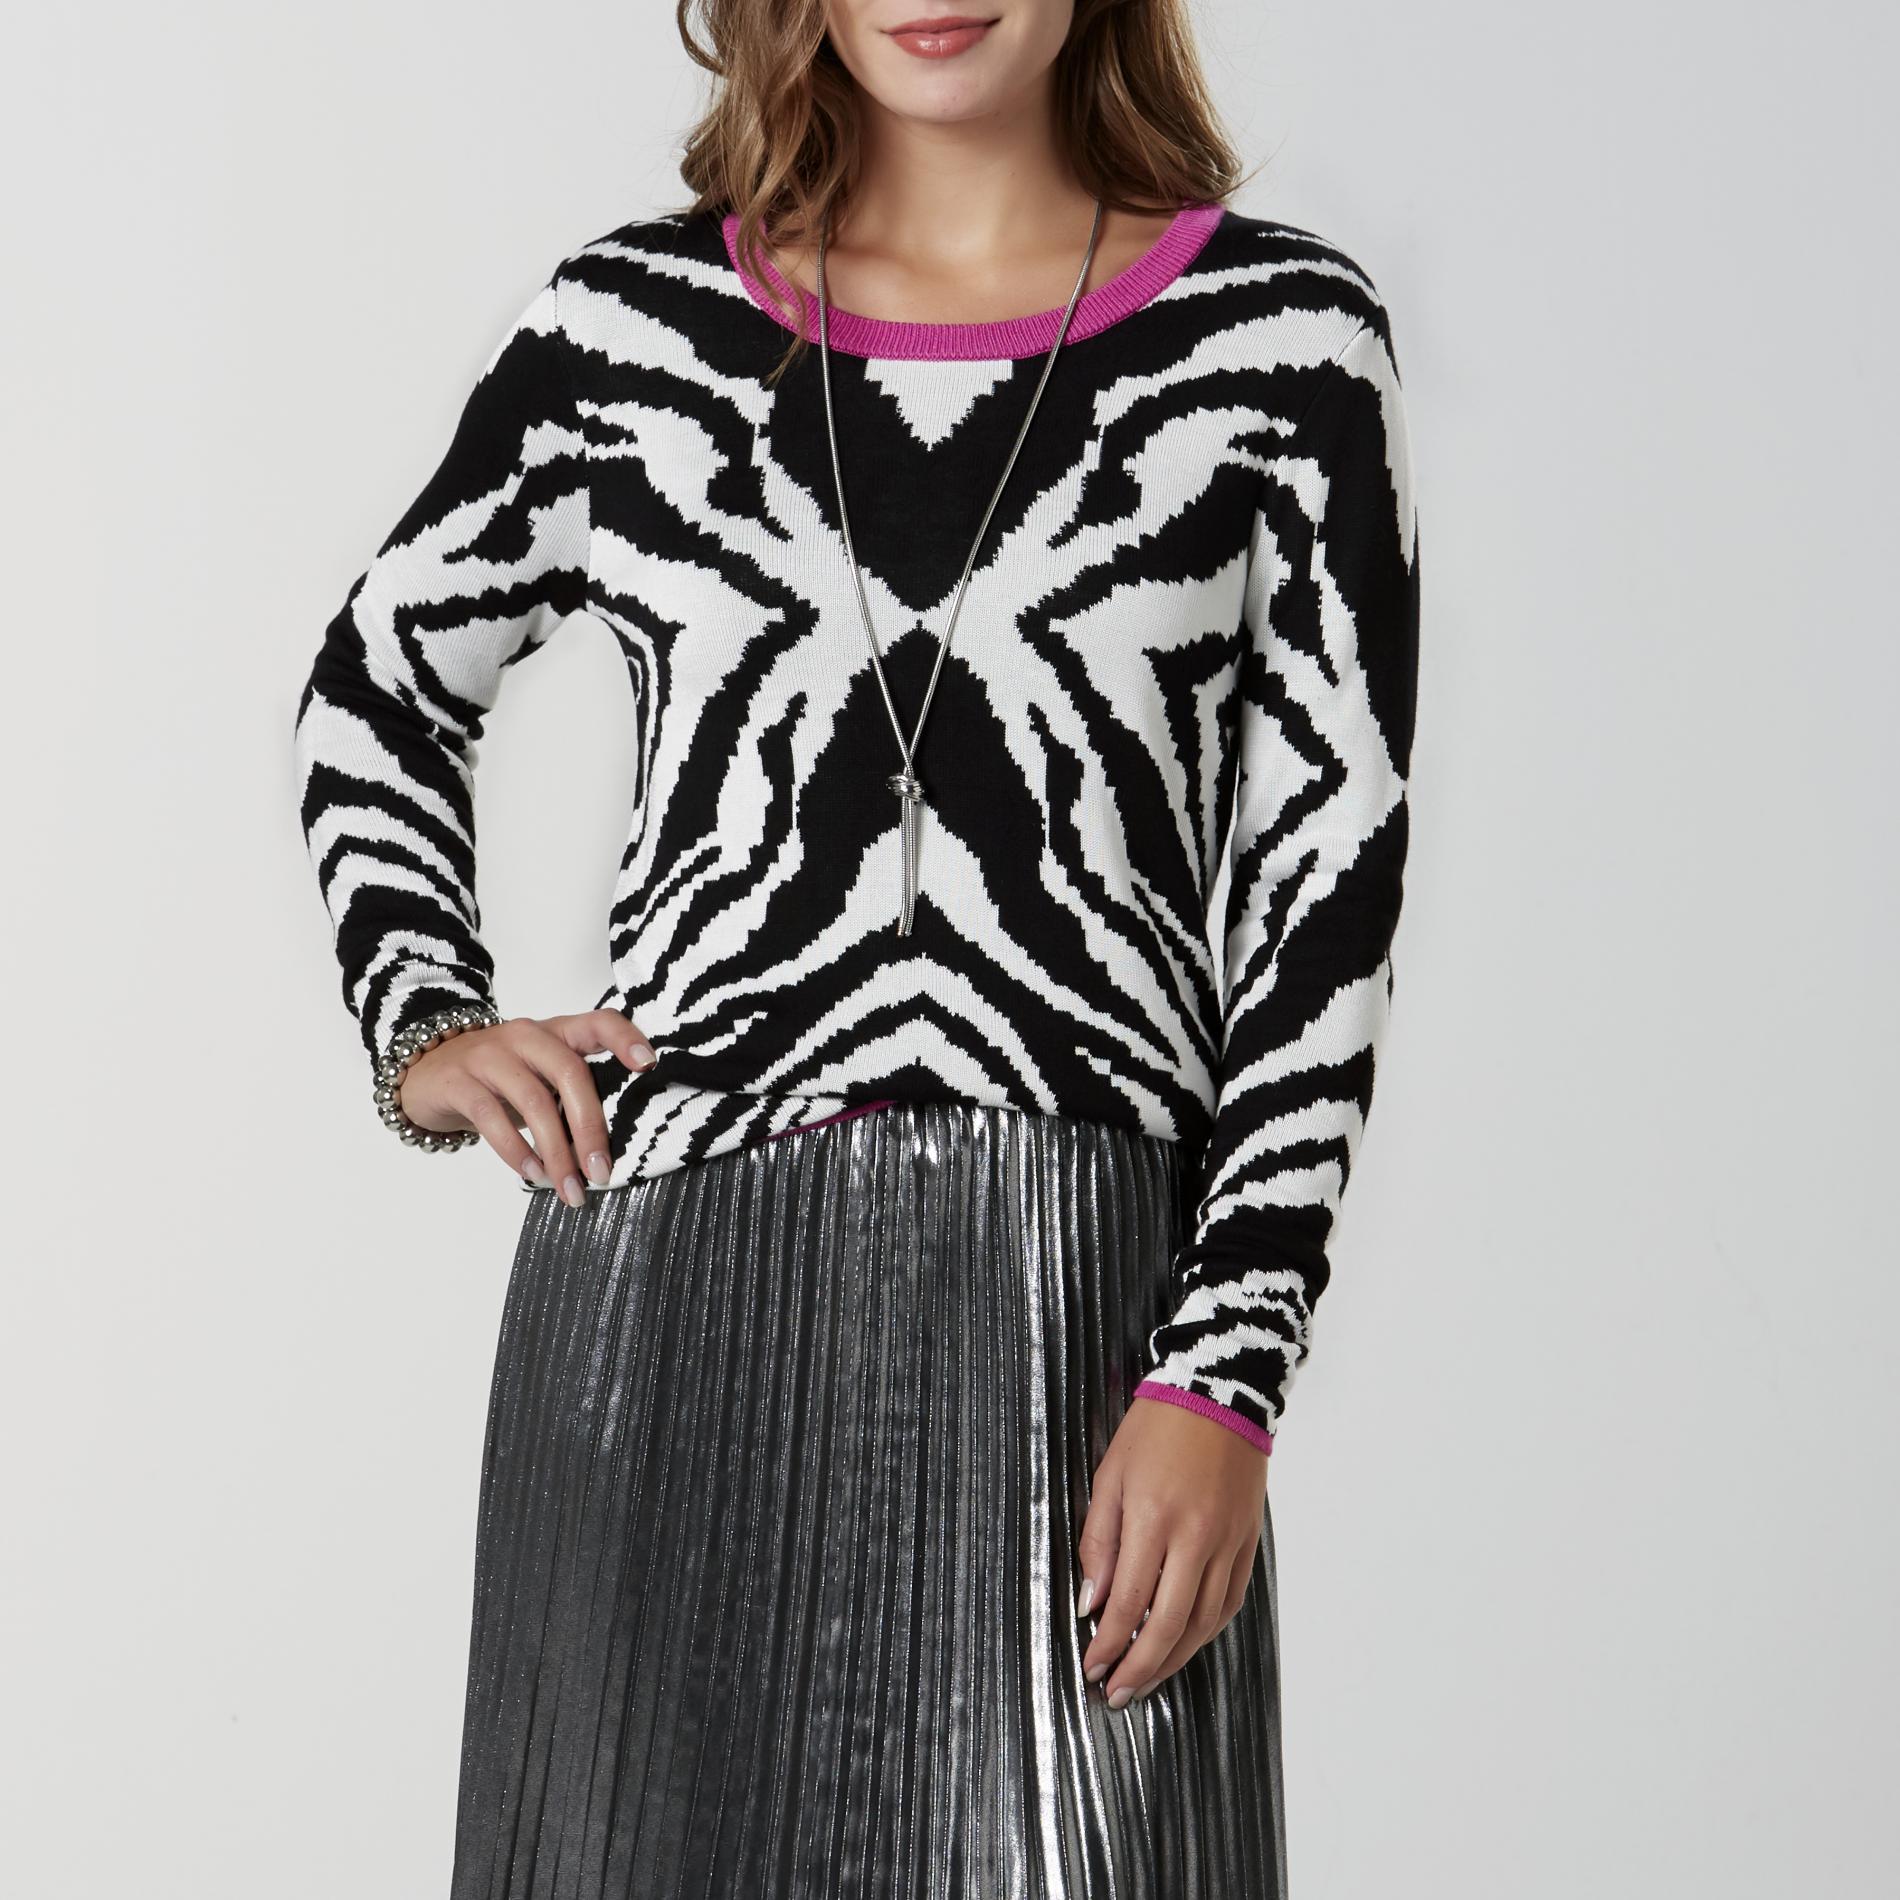 Simply Styled Women's Jacquard Sweater - Zebra